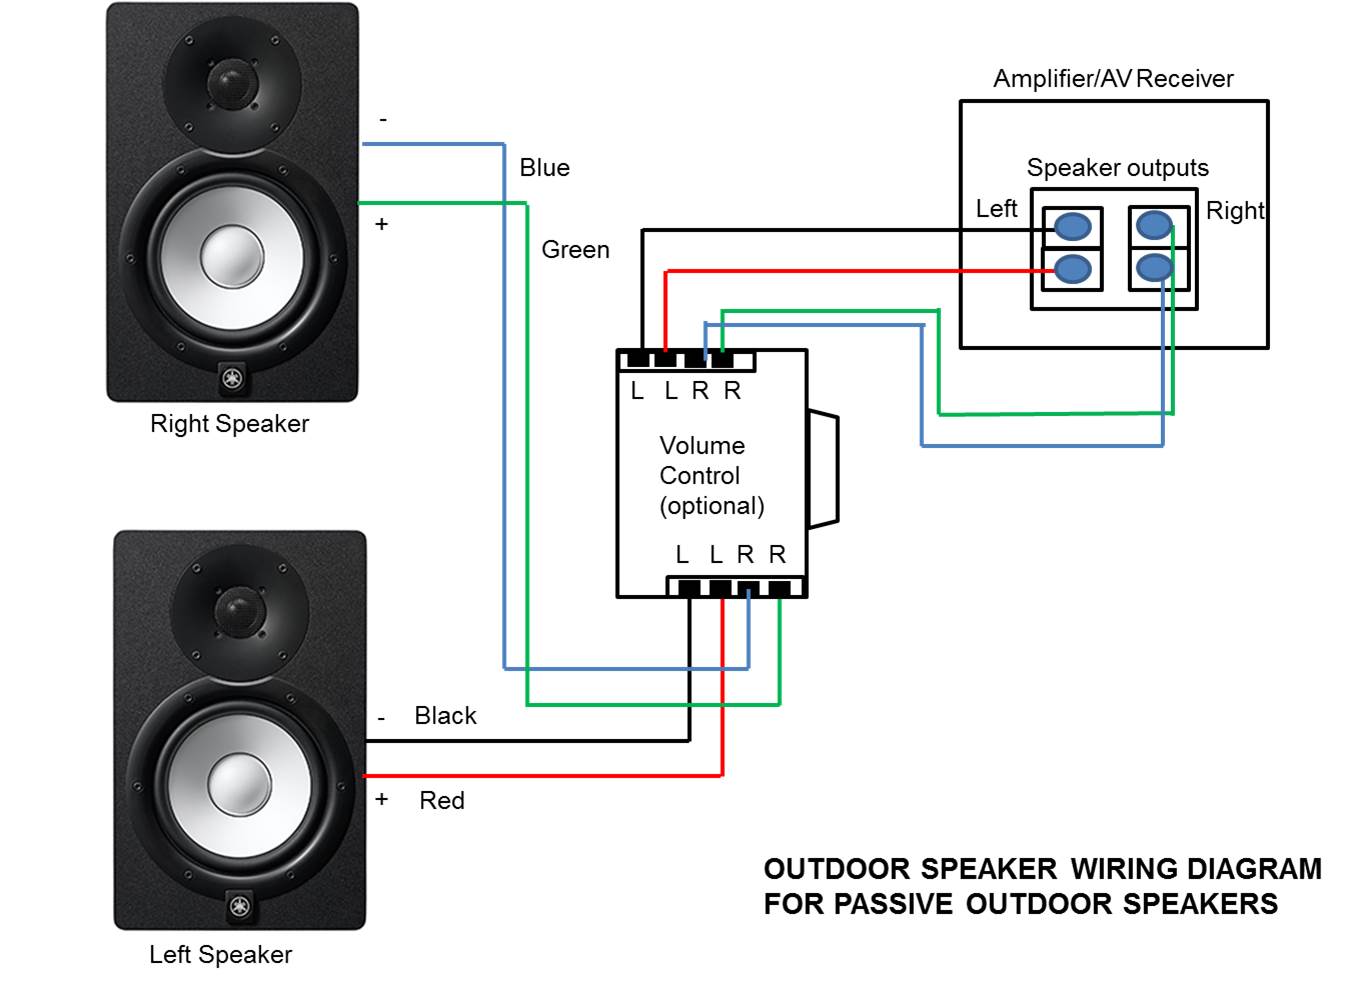 Best Outdoor Speakers in 2019 for Gardens, Patios and ... m audio speaker wiring diagram 